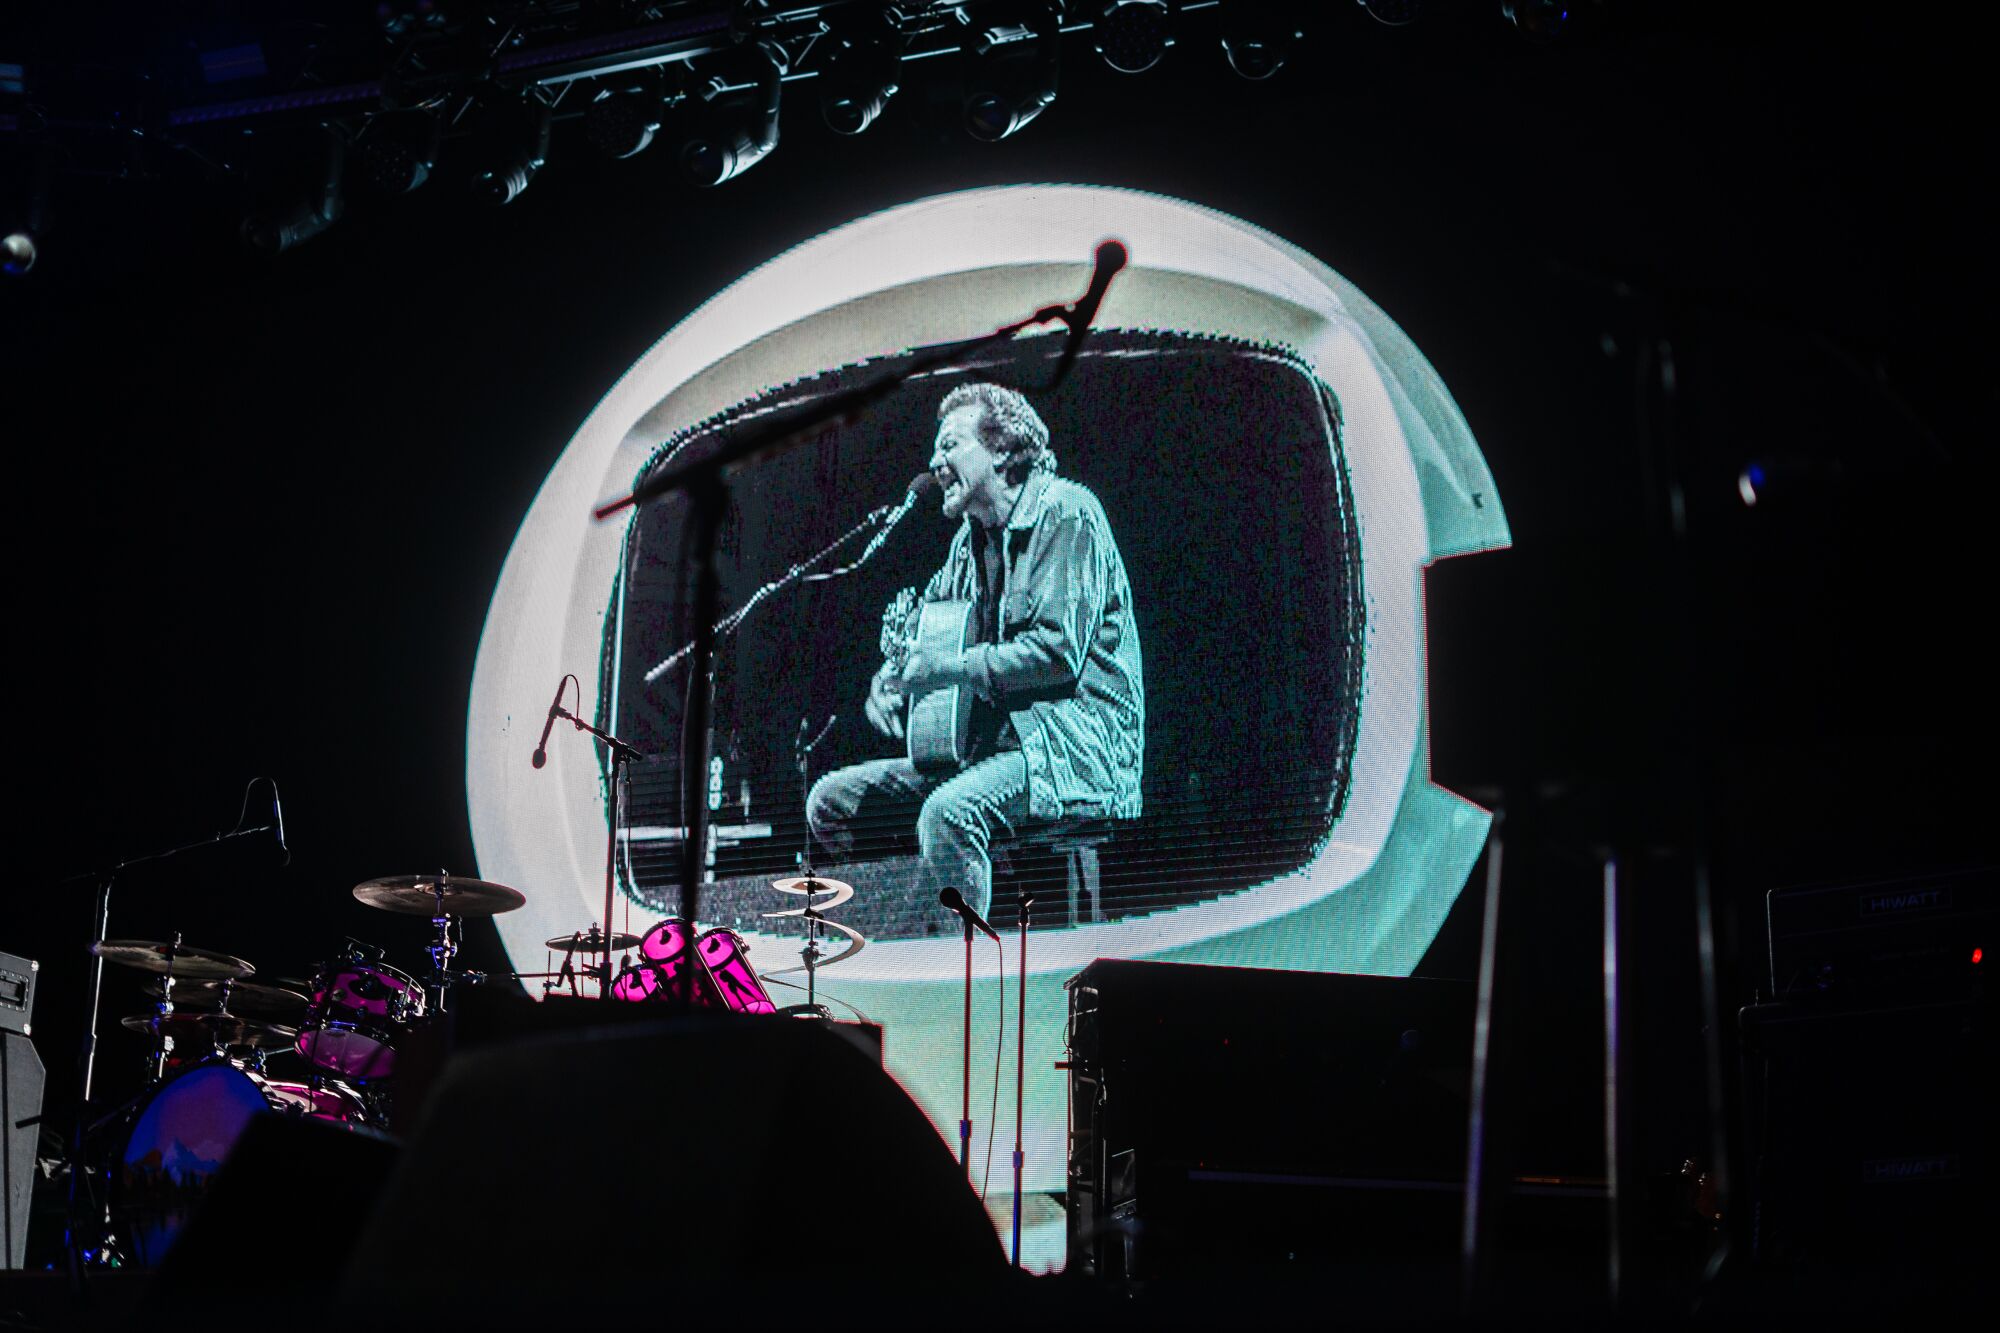 Singer, songwriter Eddie Vedder performs on stage at the Ohana Festival on September 25, 2021 in Dana Point, California.